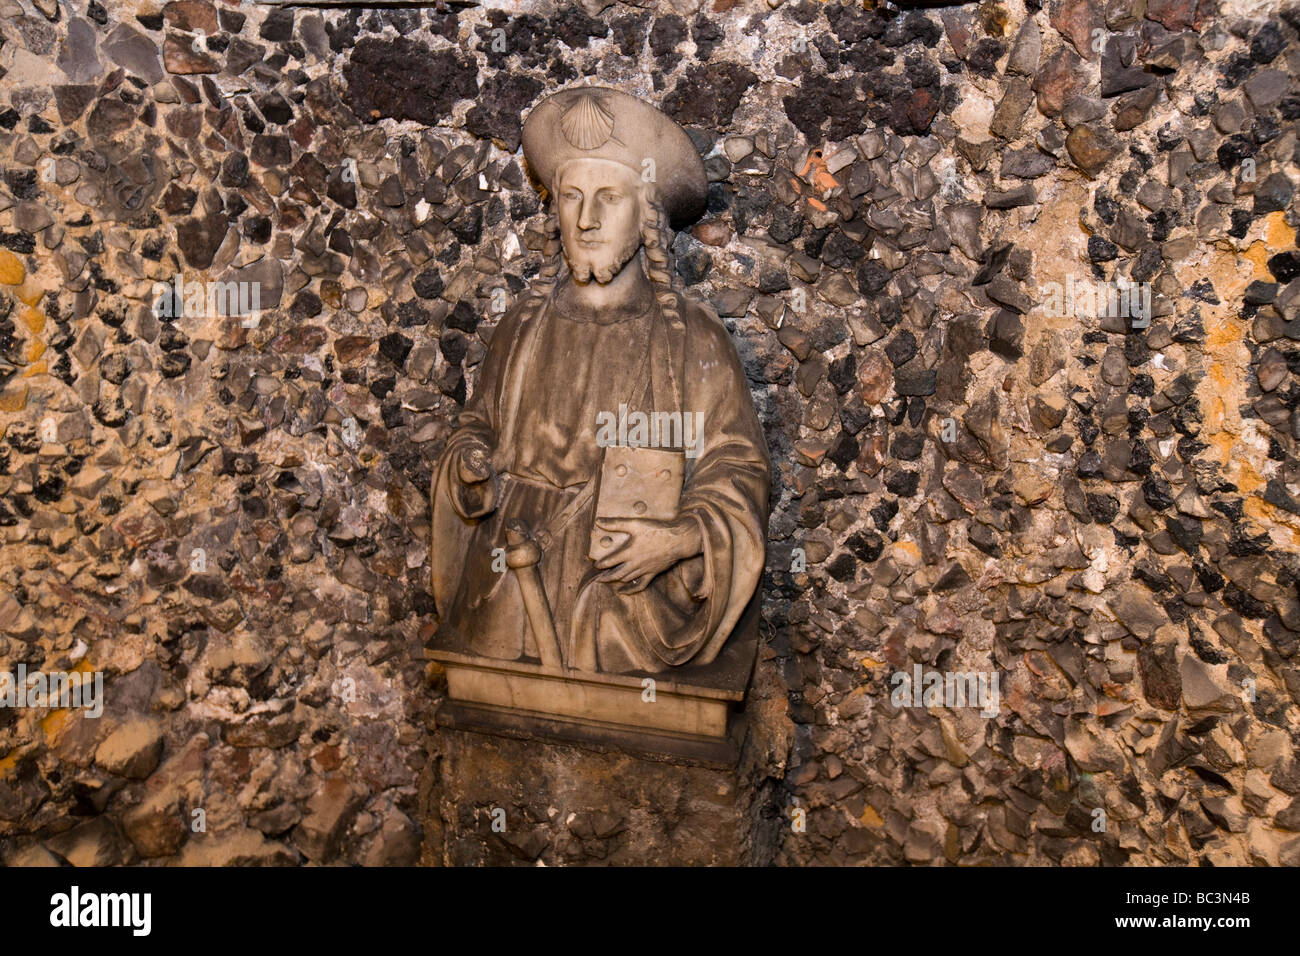 Staute of Saint James. Pope's Grotto, Twickenham. London. Stock Photo